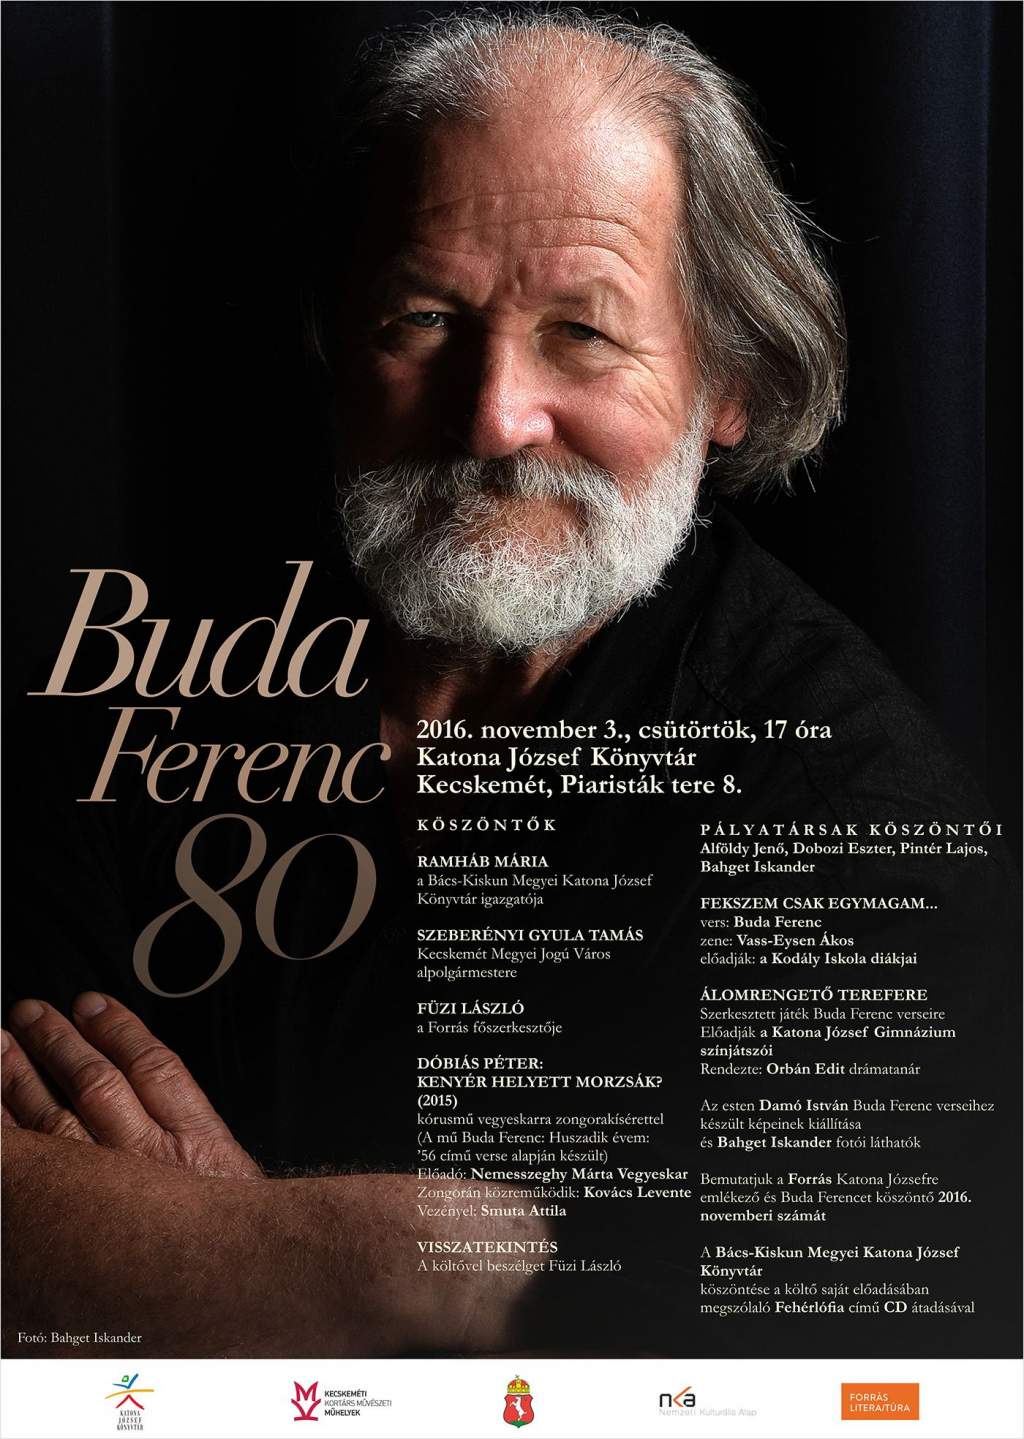 Buda Ferenc 80